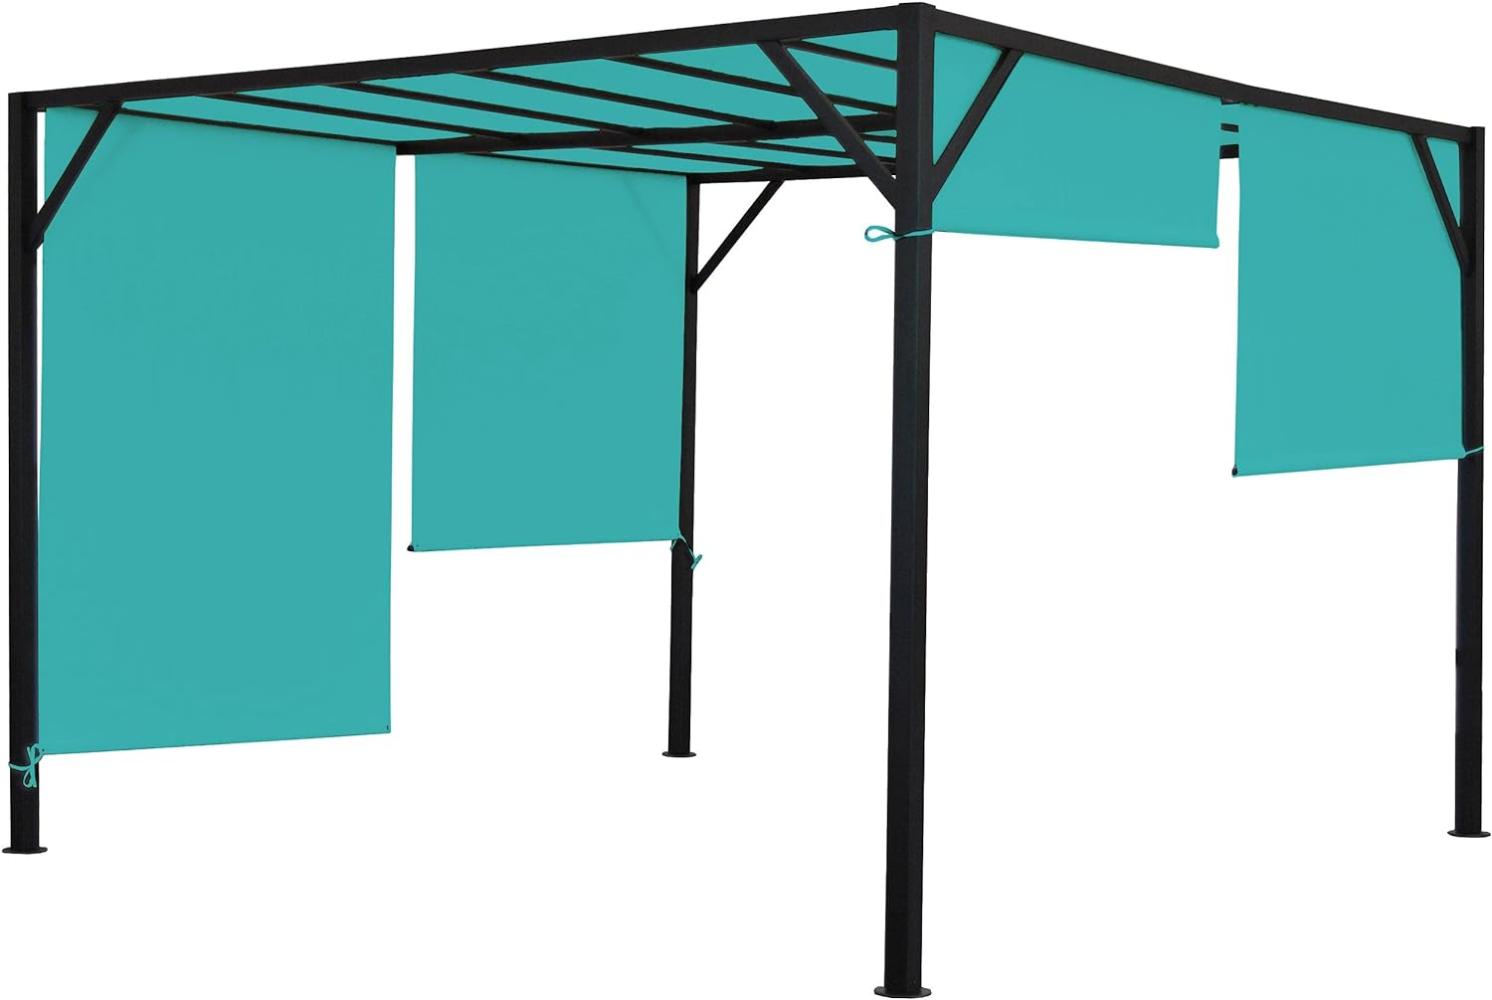 Pergola Baia, Garten Pavillon Terrassenüberdachung, stabiles 6cm-Stahl-Gestell + Schiebedach türkis-blau ~ 3x3m Bild 1